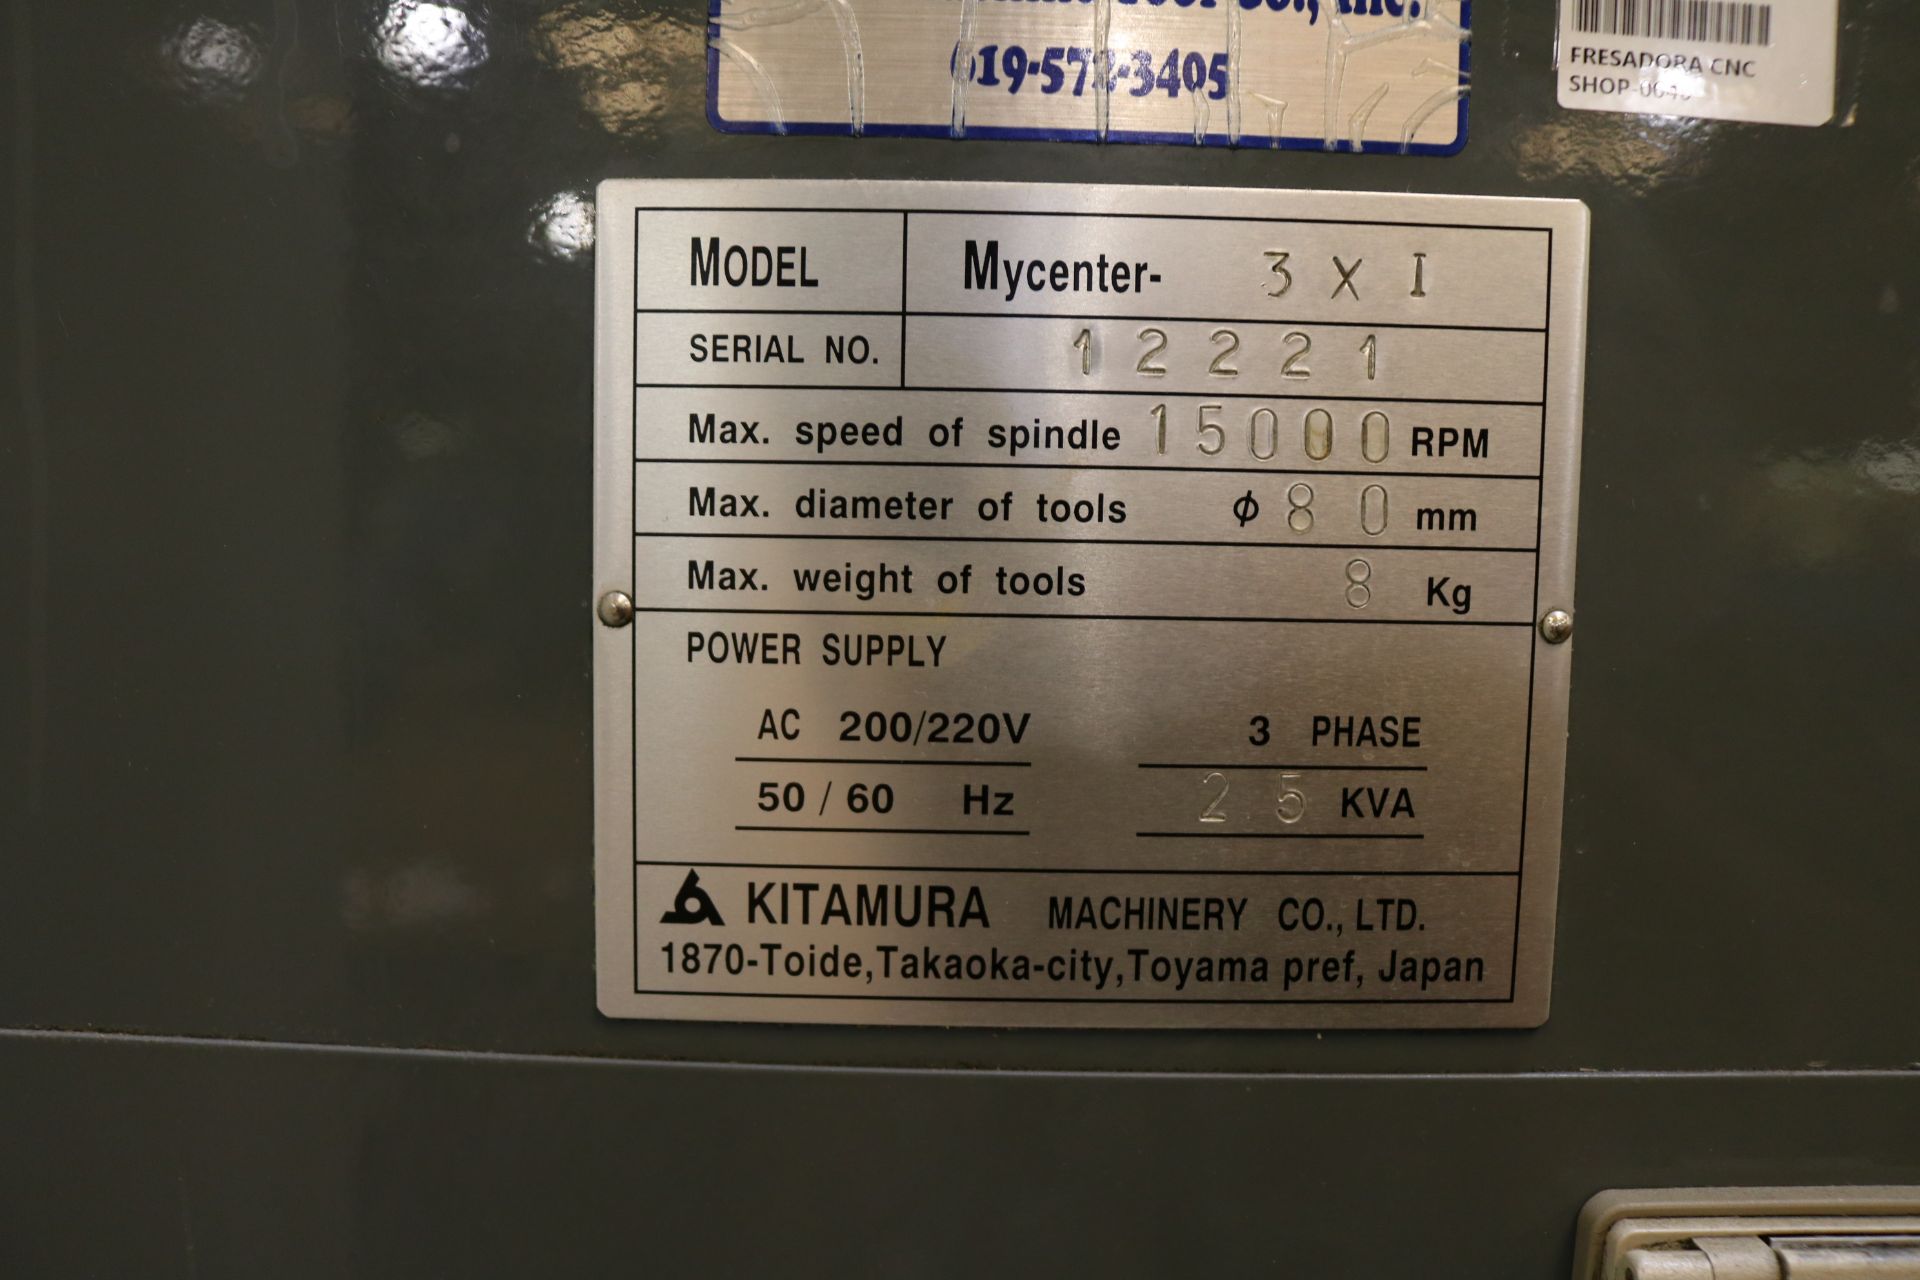 KITAMURA MYCENTER 3XI VERTICAL MACHINING CENTER, TRAVELS: 30" X 18" X 18", FANUC 16-I-M CNC CONTROL, - Image 7 of 7